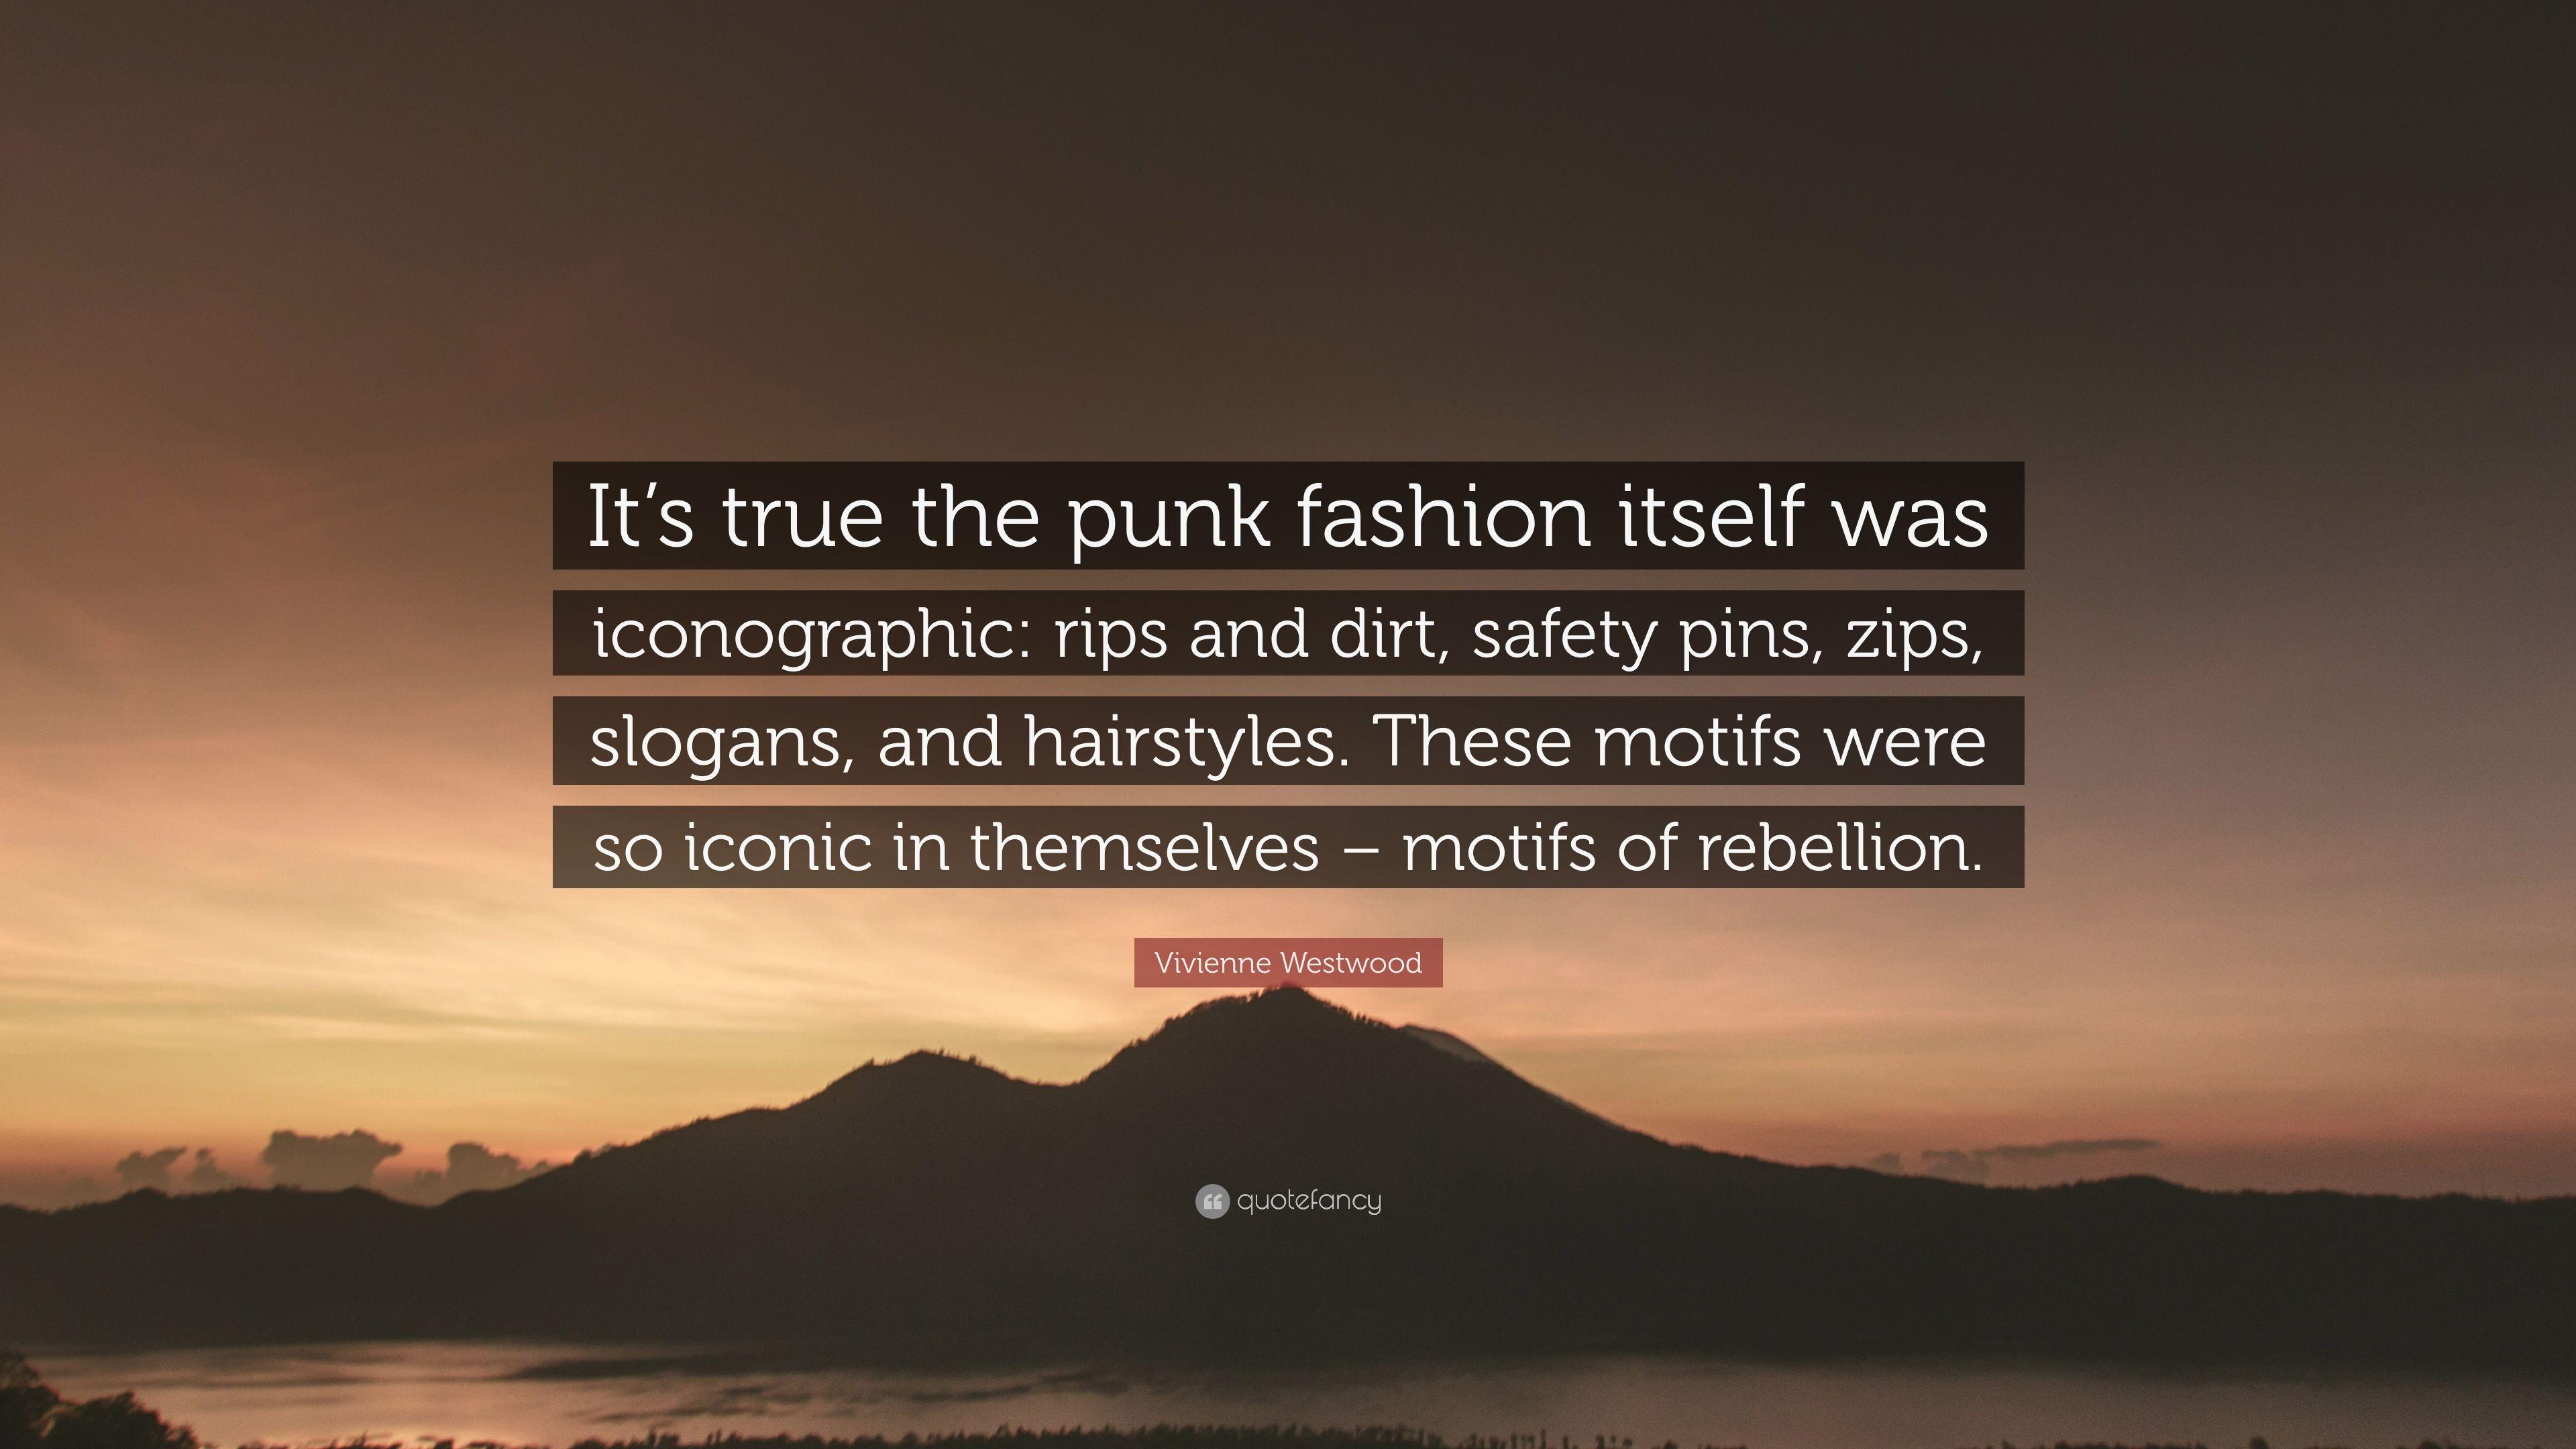 Vivienne Westwood Quote: “It's true the punk fashion itself was